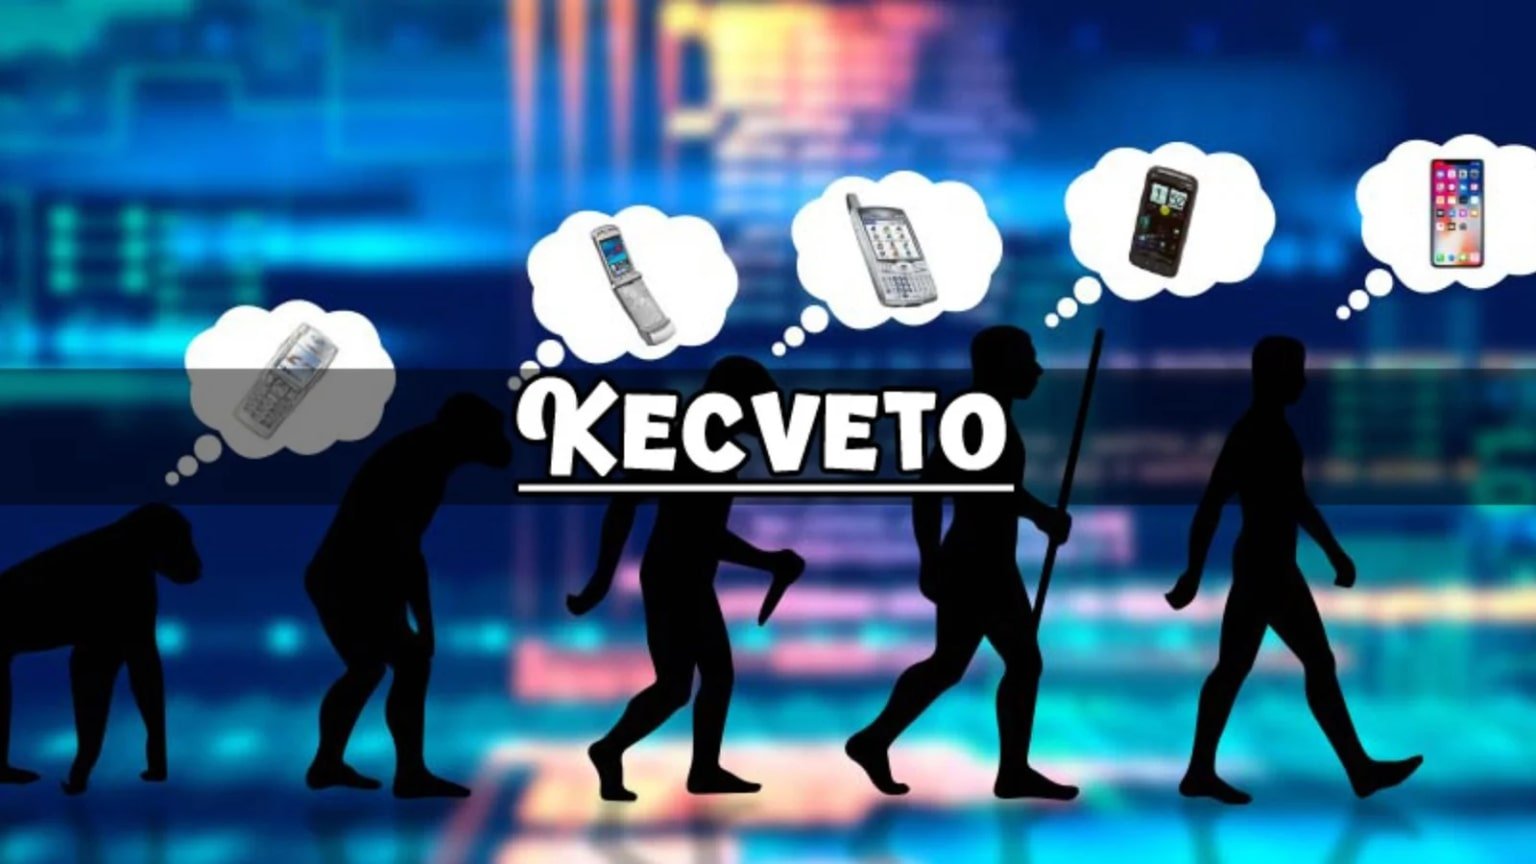 Introduction to Kecveto